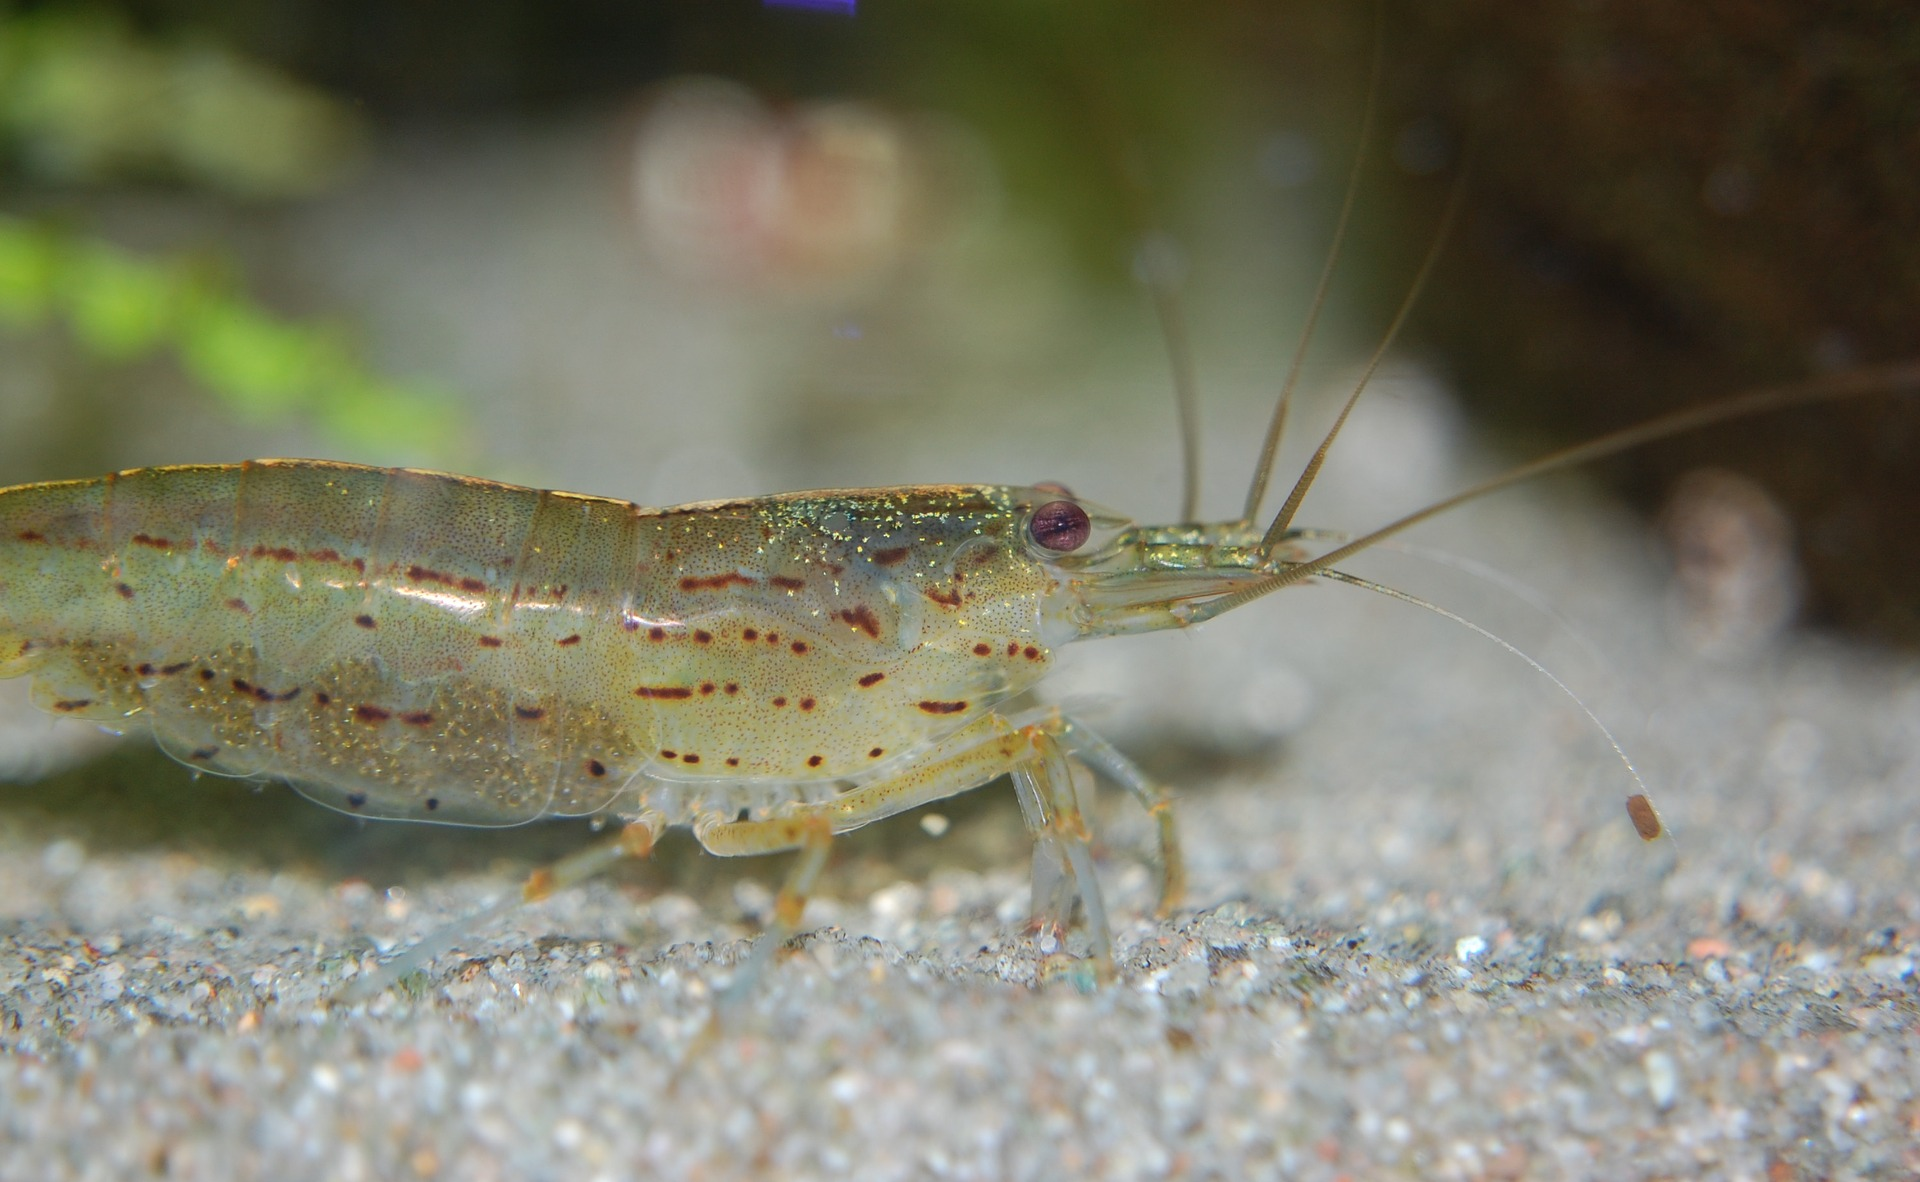 the Amano shrimp